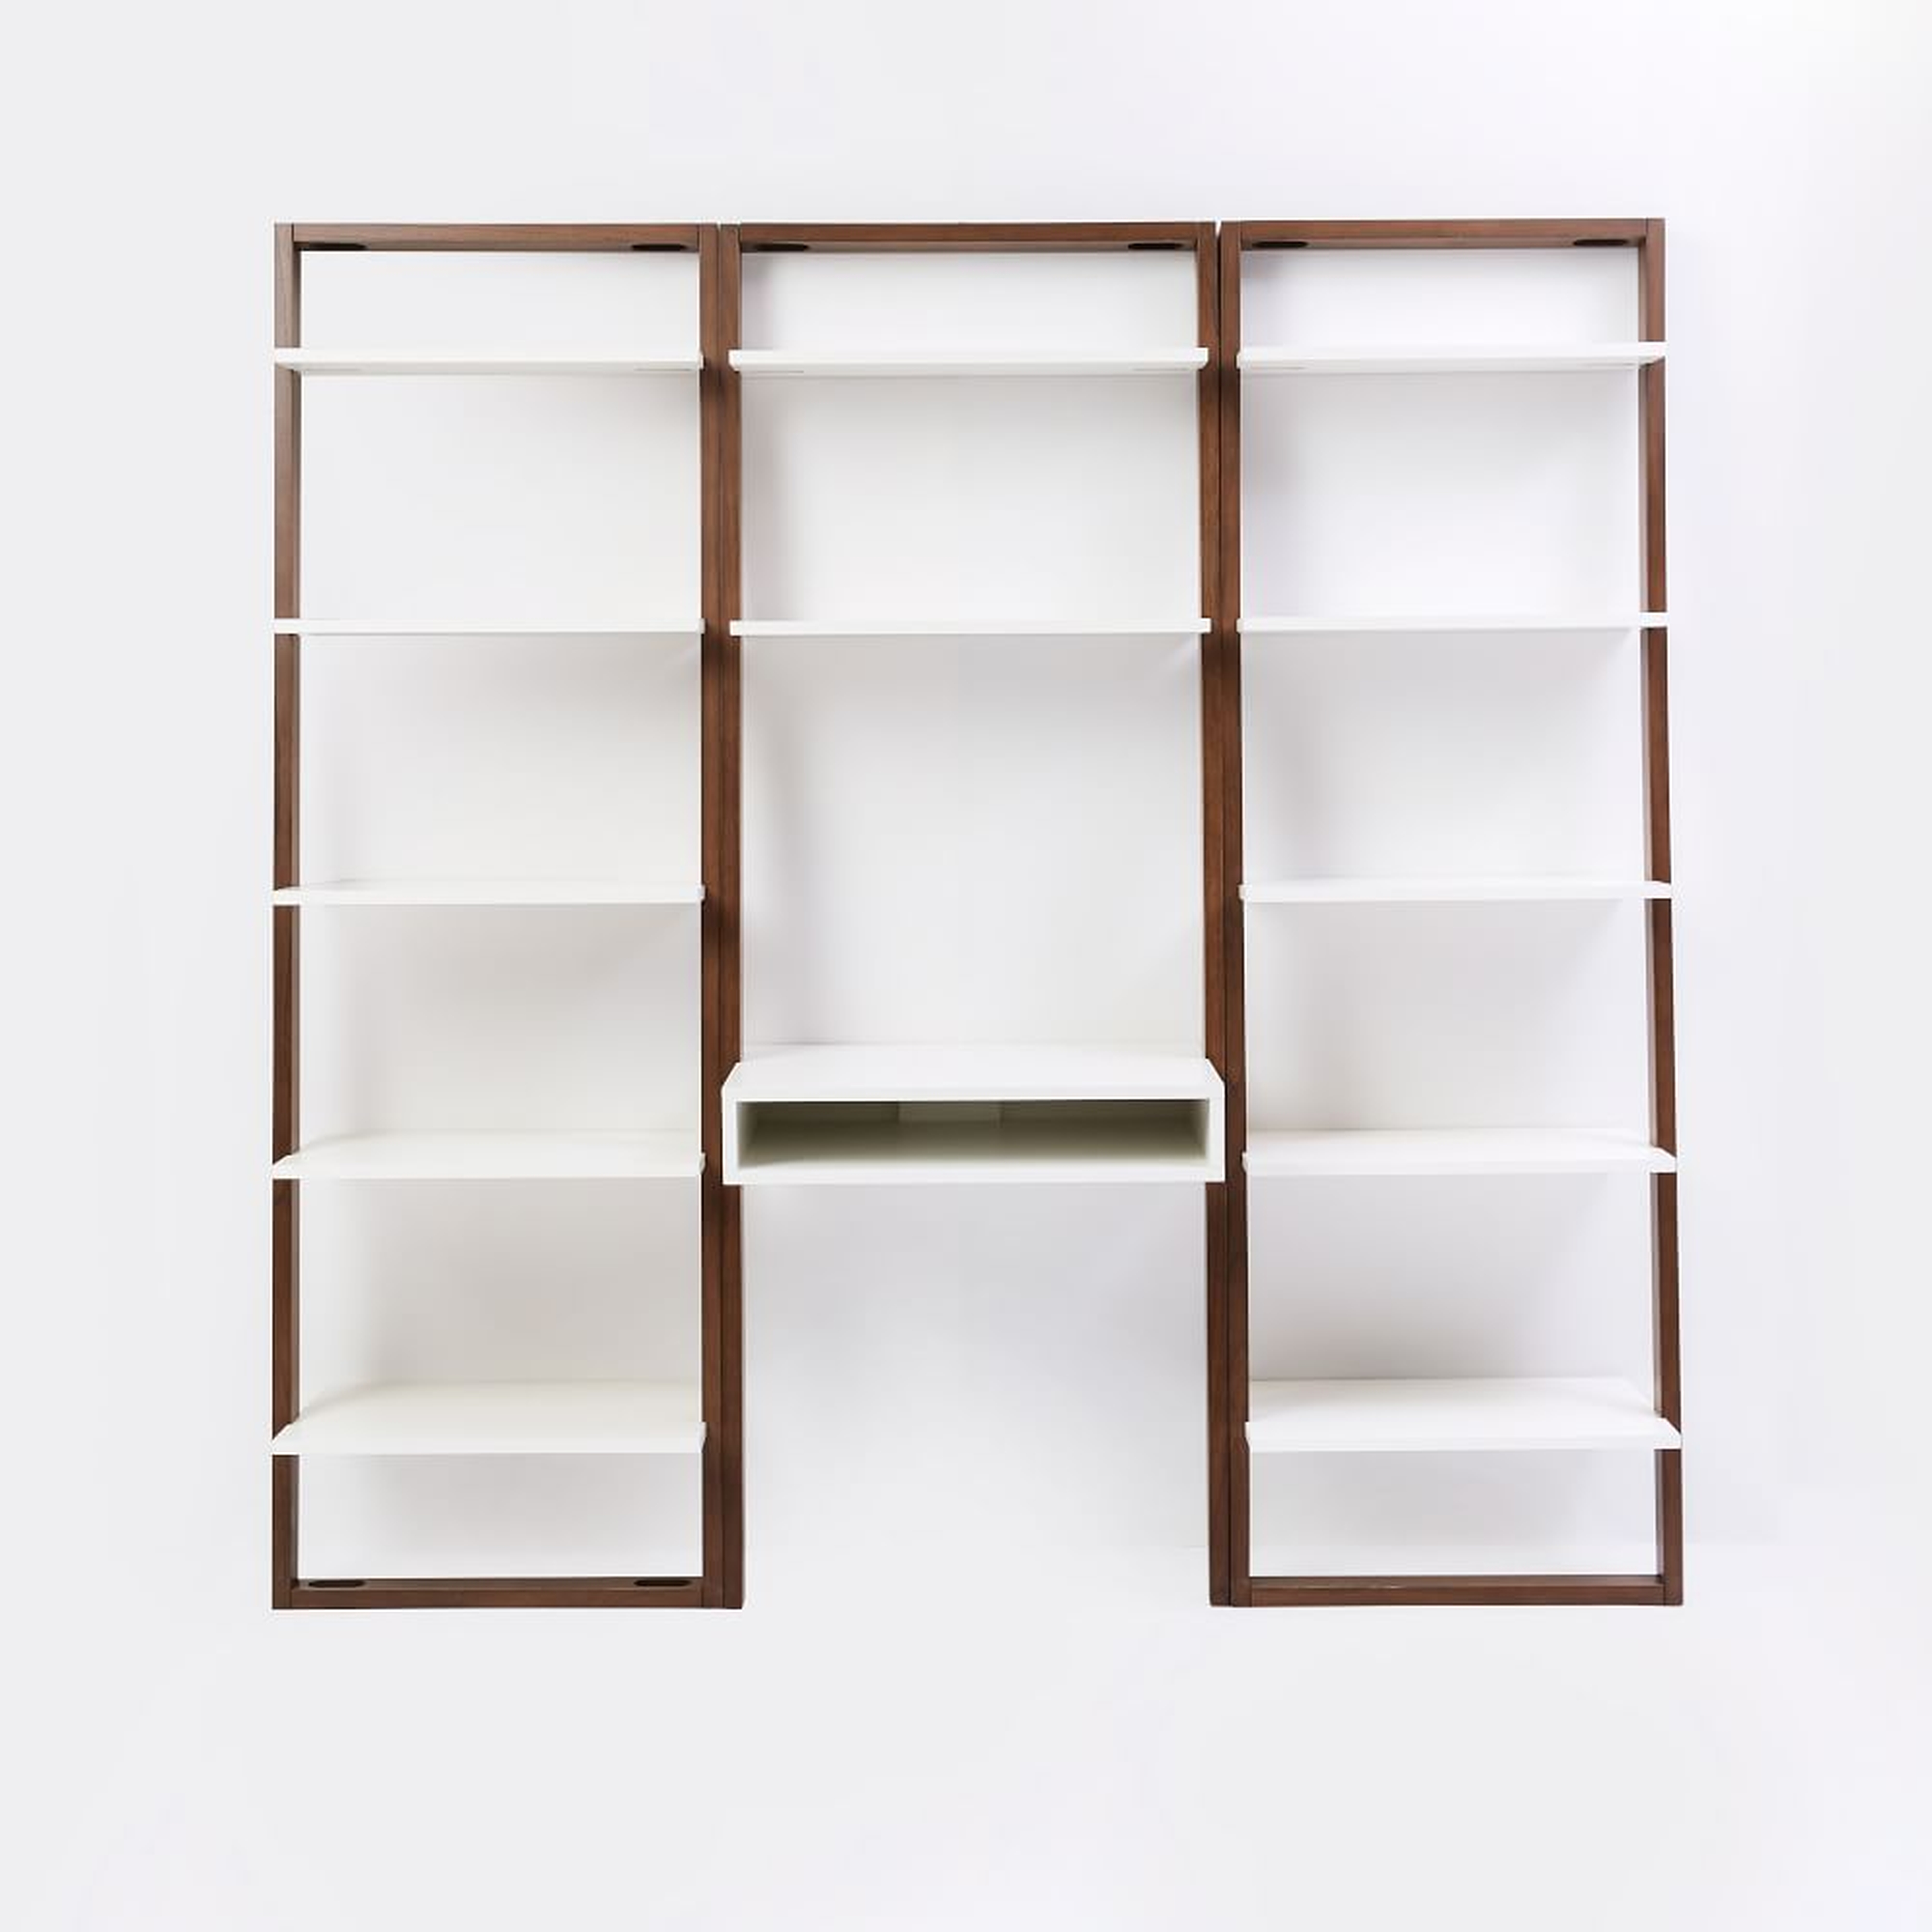 Ladder Shelf Storage Leaning Wall Desk + 2 Wide Shelves - Set 2: White Lacquer/Espresso - West Elm